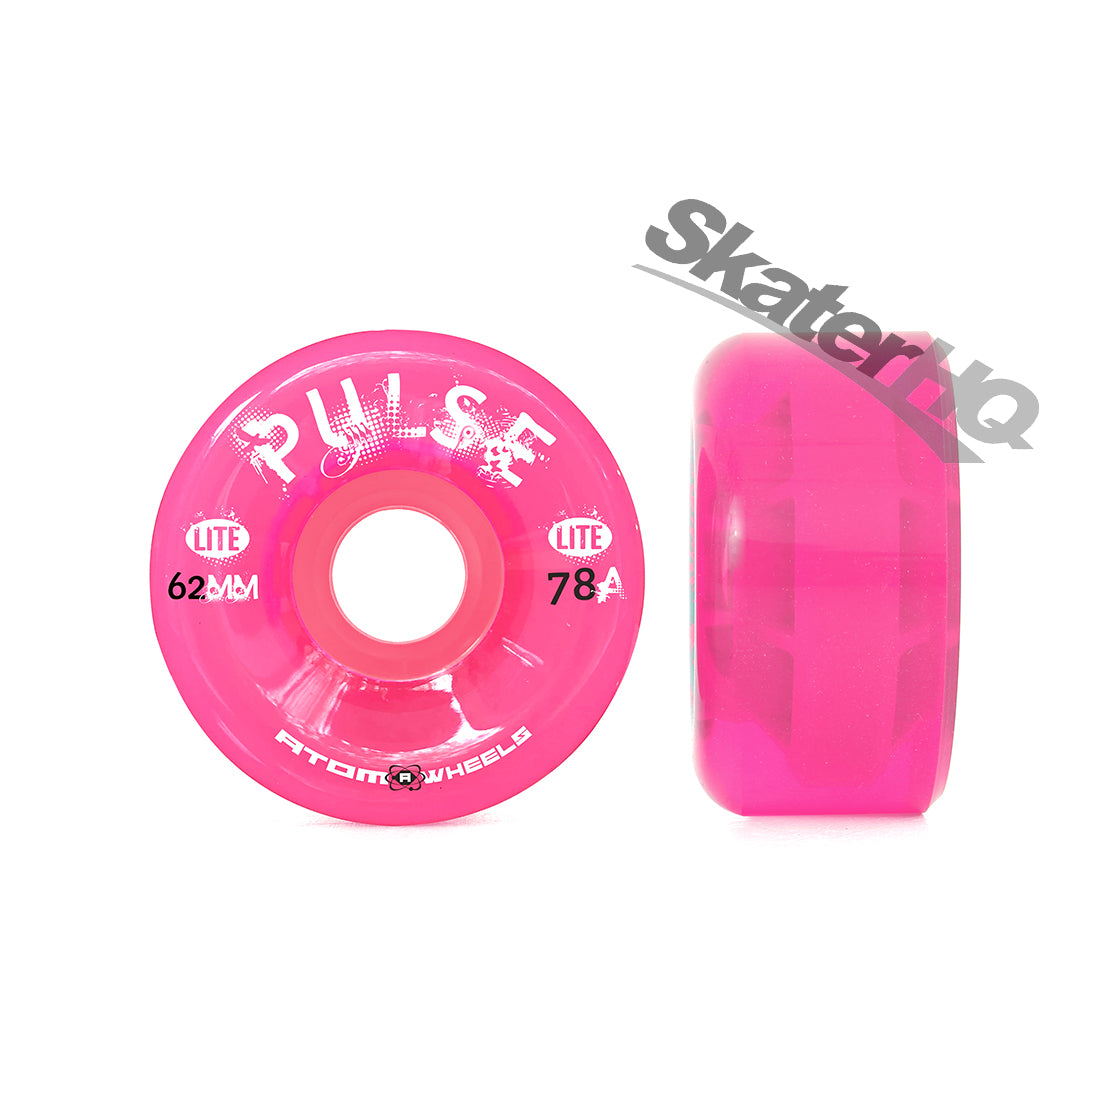 Atom Pulse Lite 62x33mm 78a 4pk - Pink Roller Skate Wheels